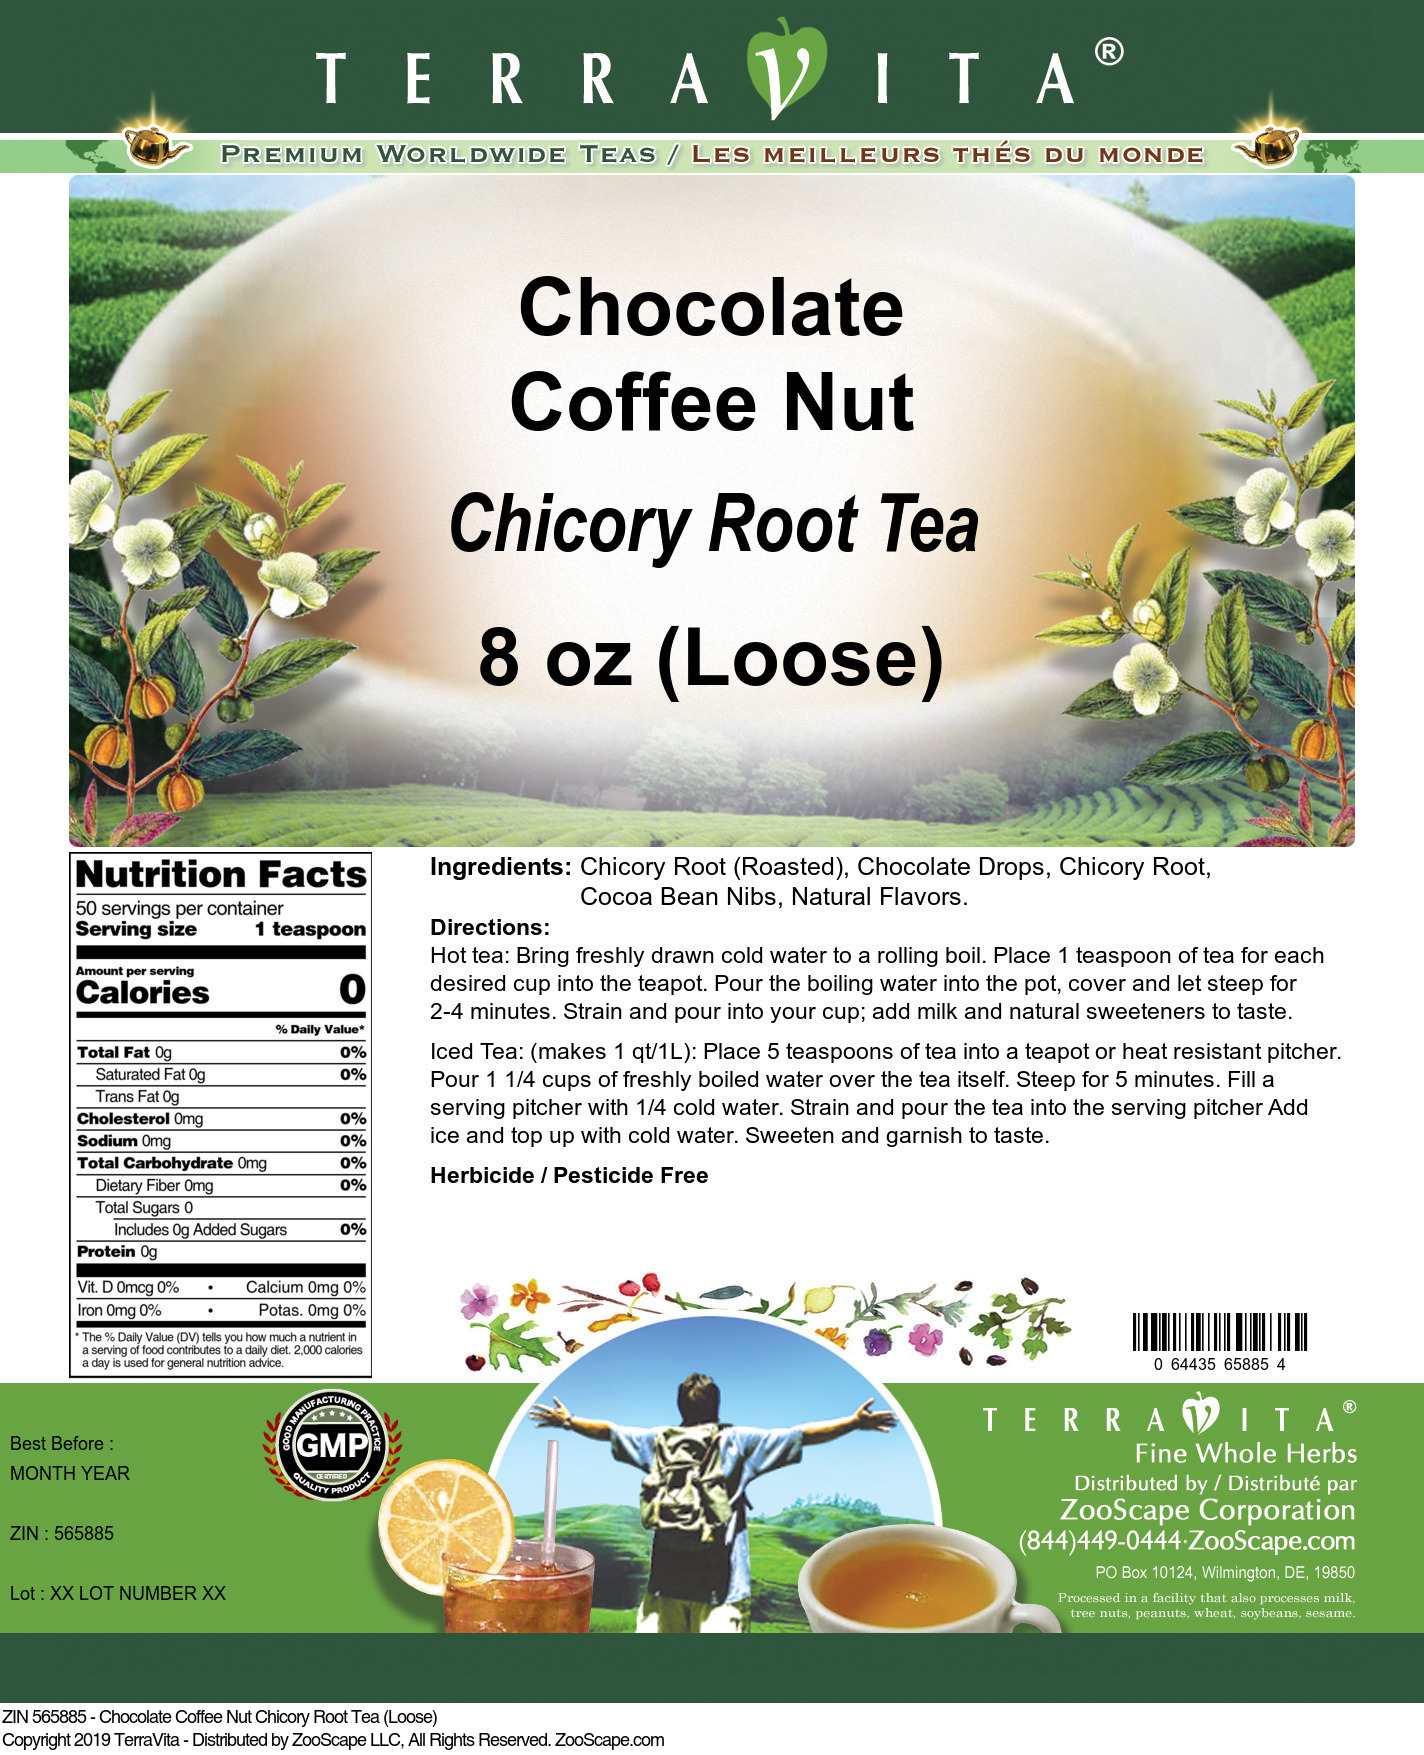 Chocolate Coffee Nut Chicory Root Tea (Loose) - Label